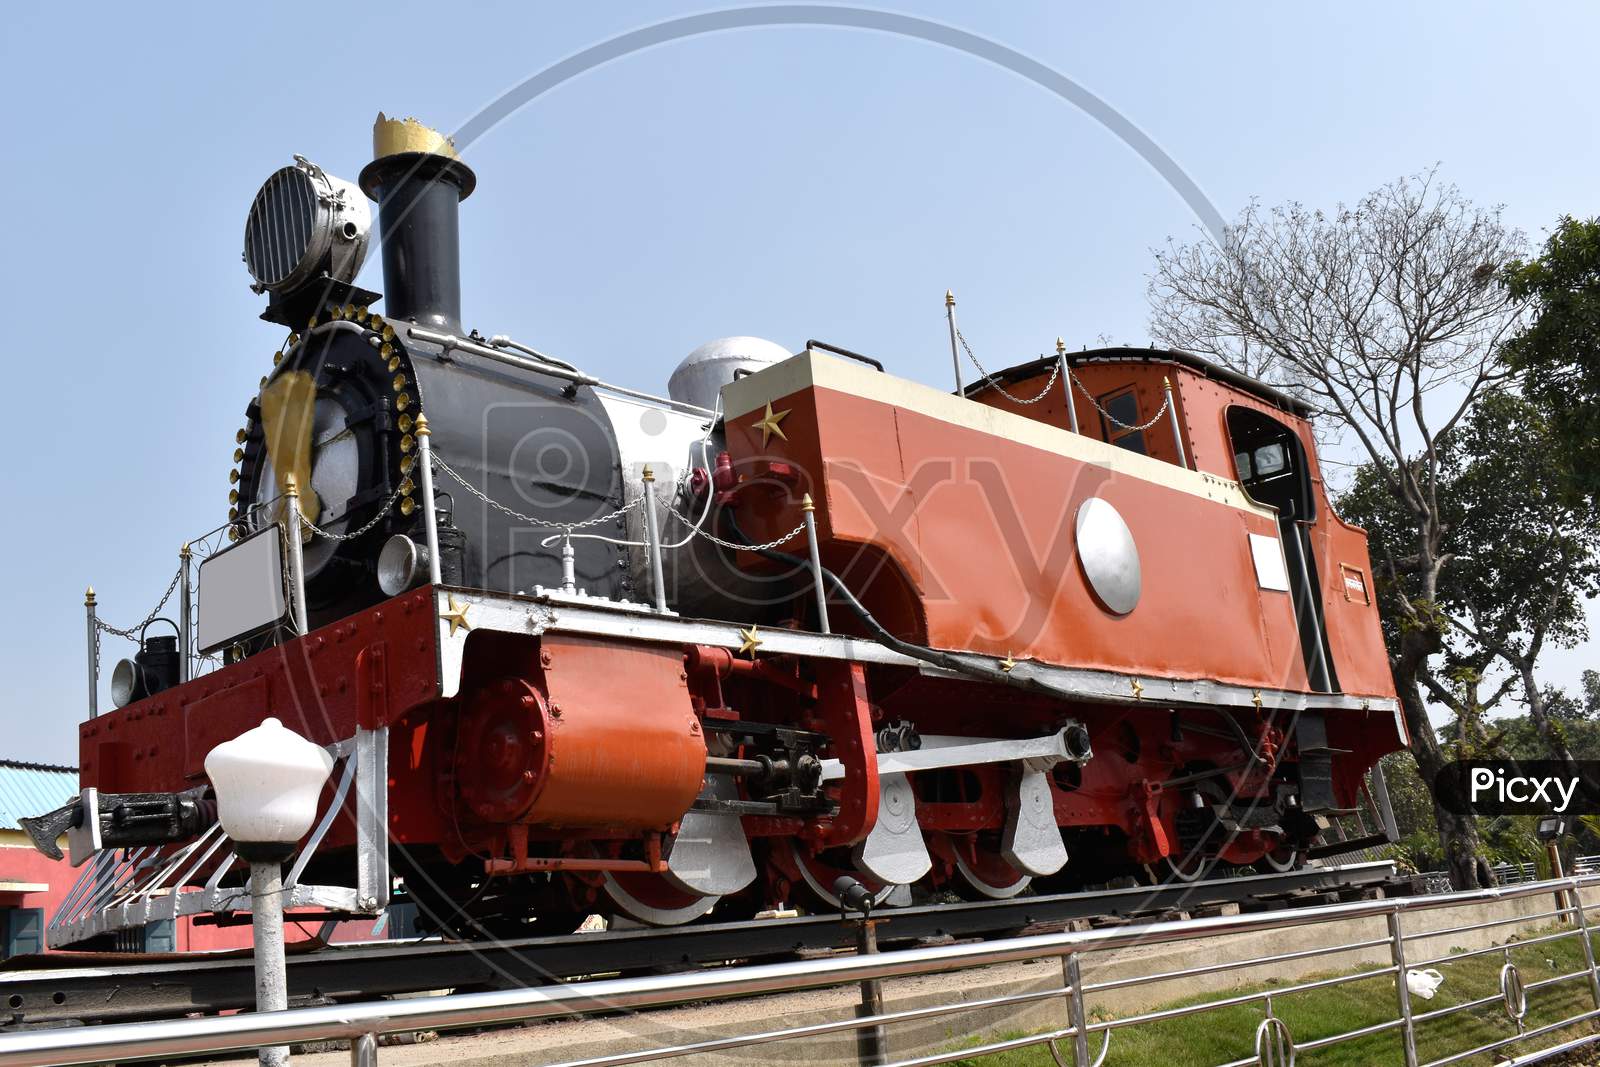 Old narrow gauge rail engine, popular as the steam engine